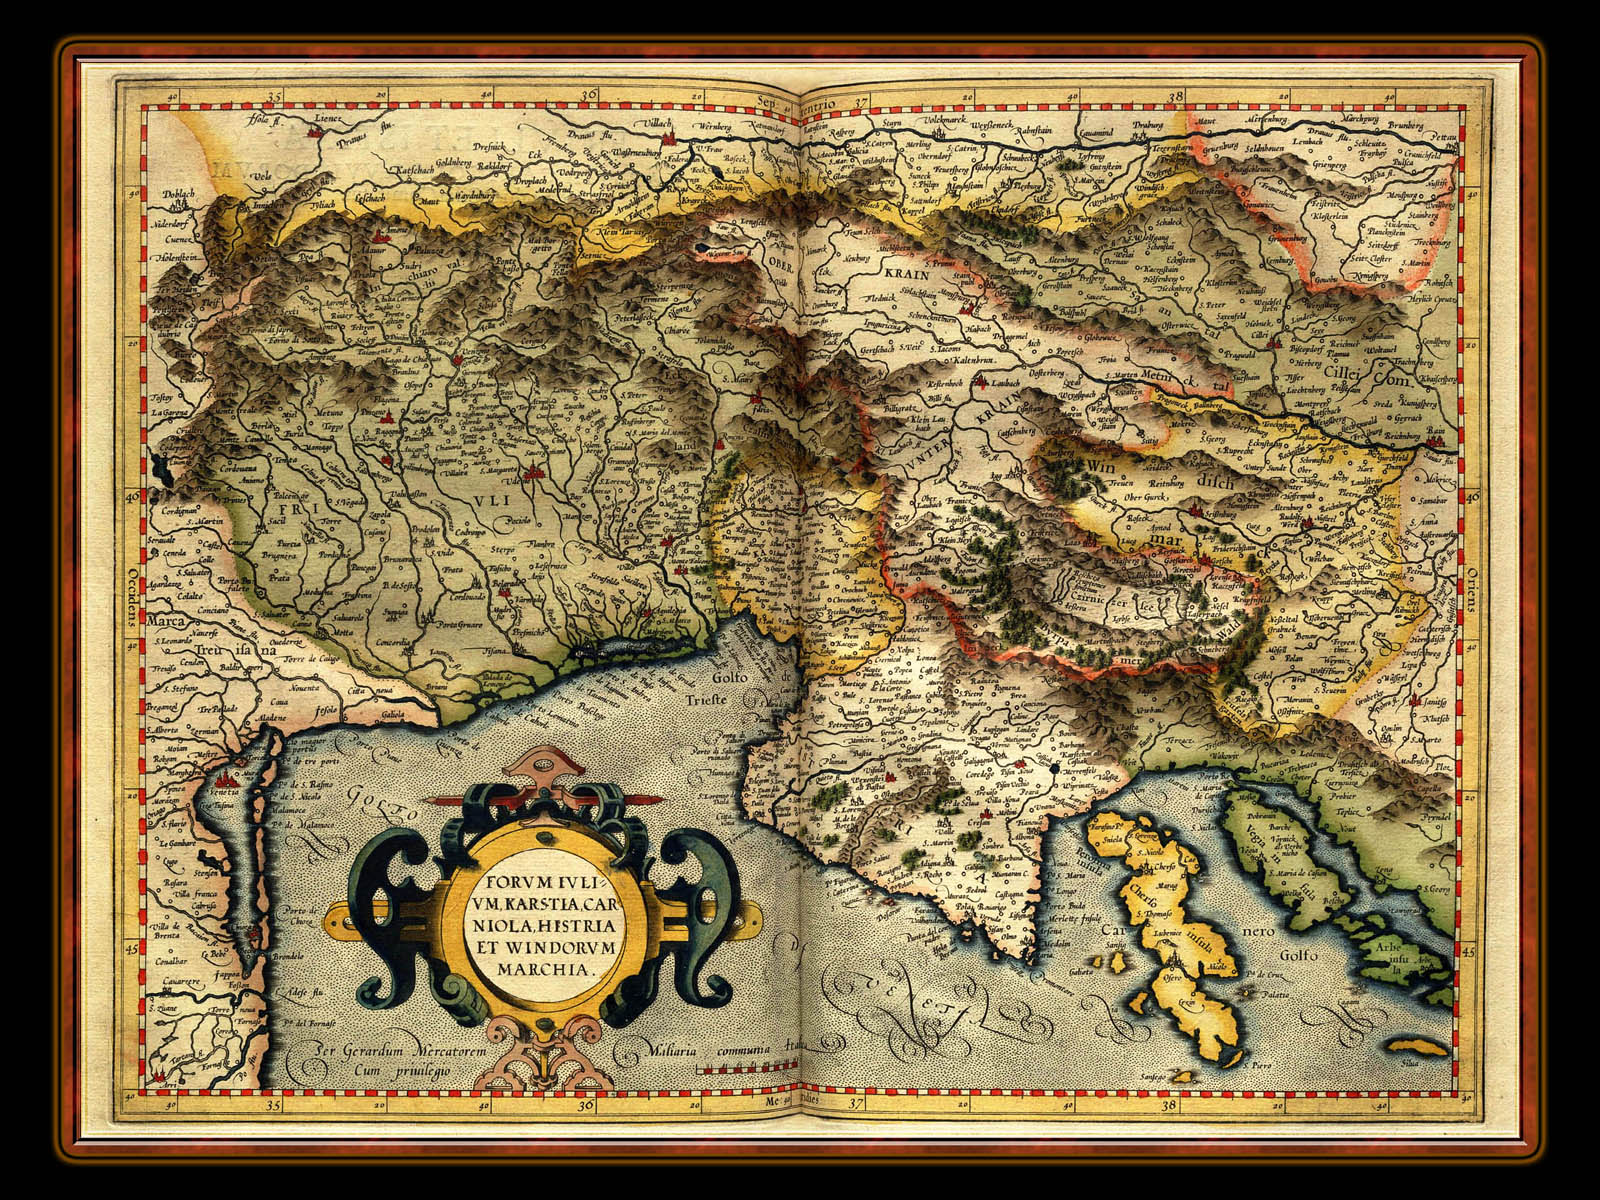 "Gerhard Mercator 1595 World Atlas - Cosmographicae" - Wallpaper No. 15 of 106. Right click for saving options.